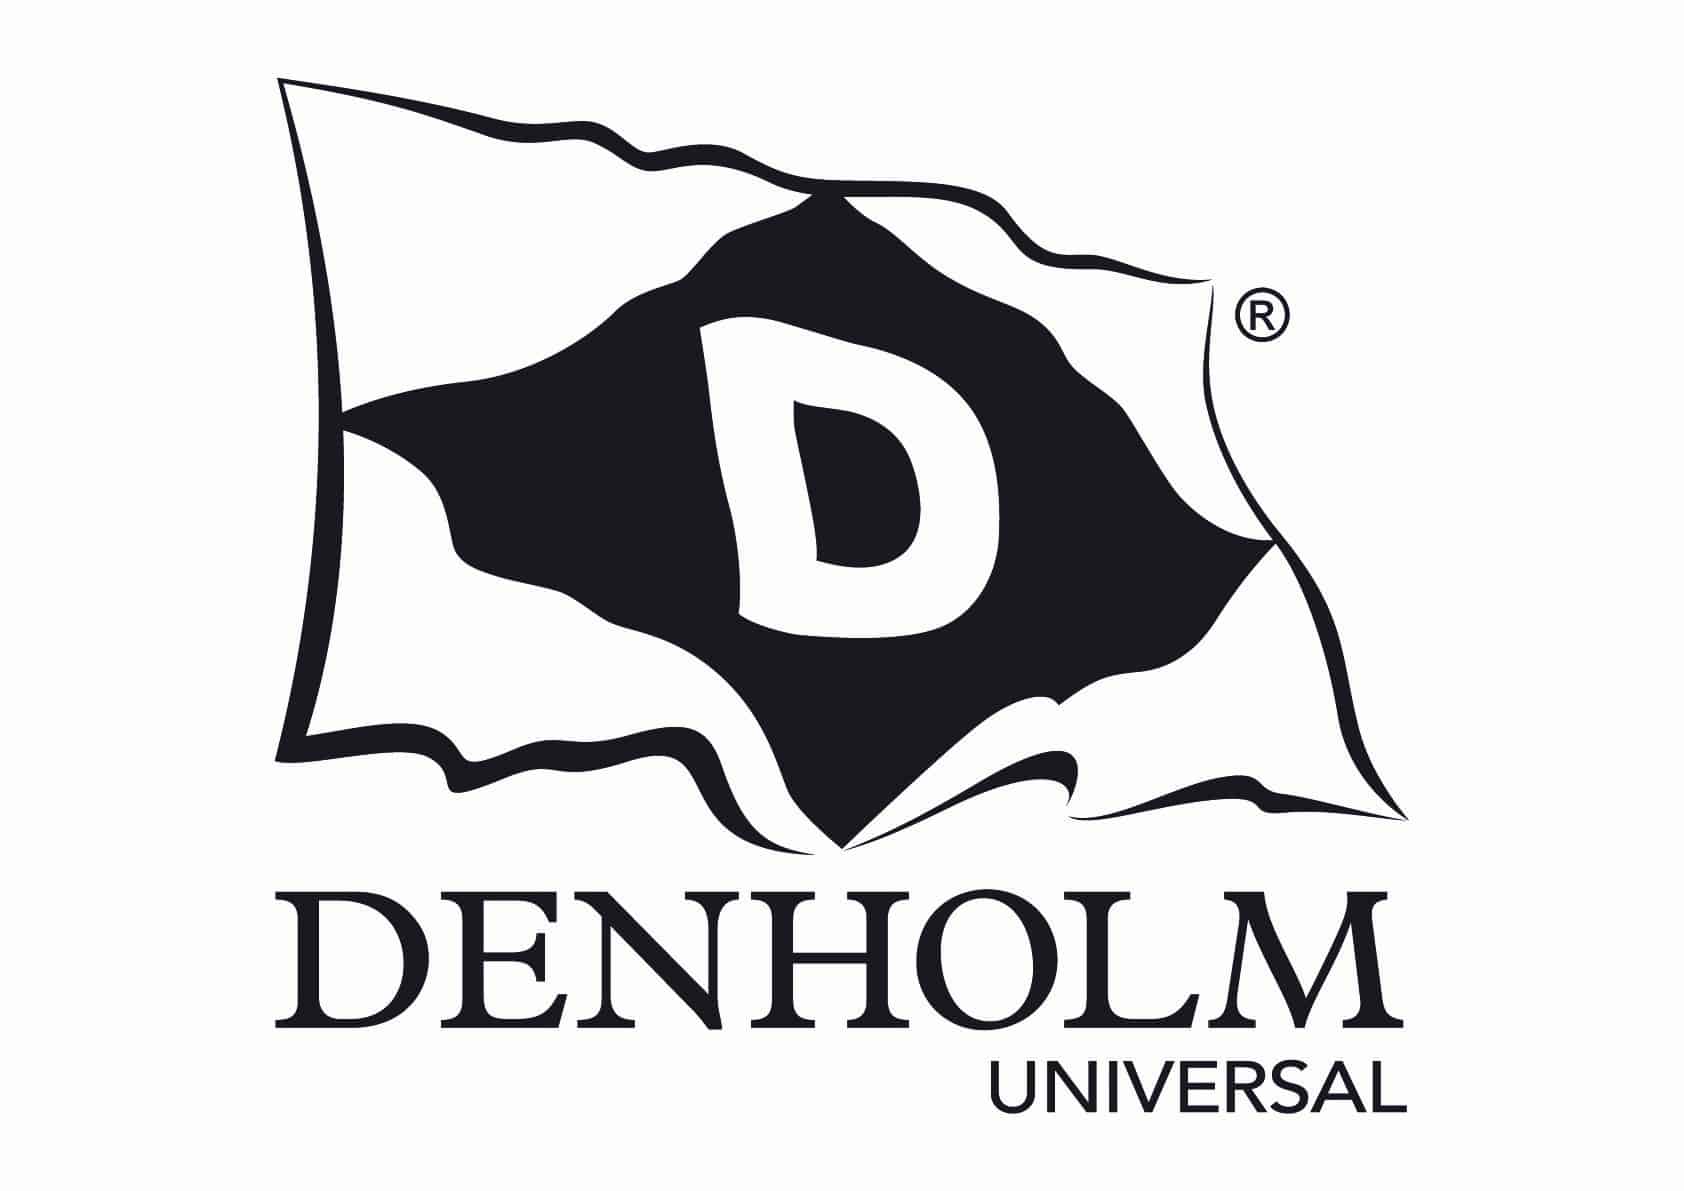 Denholm Universal Ltd